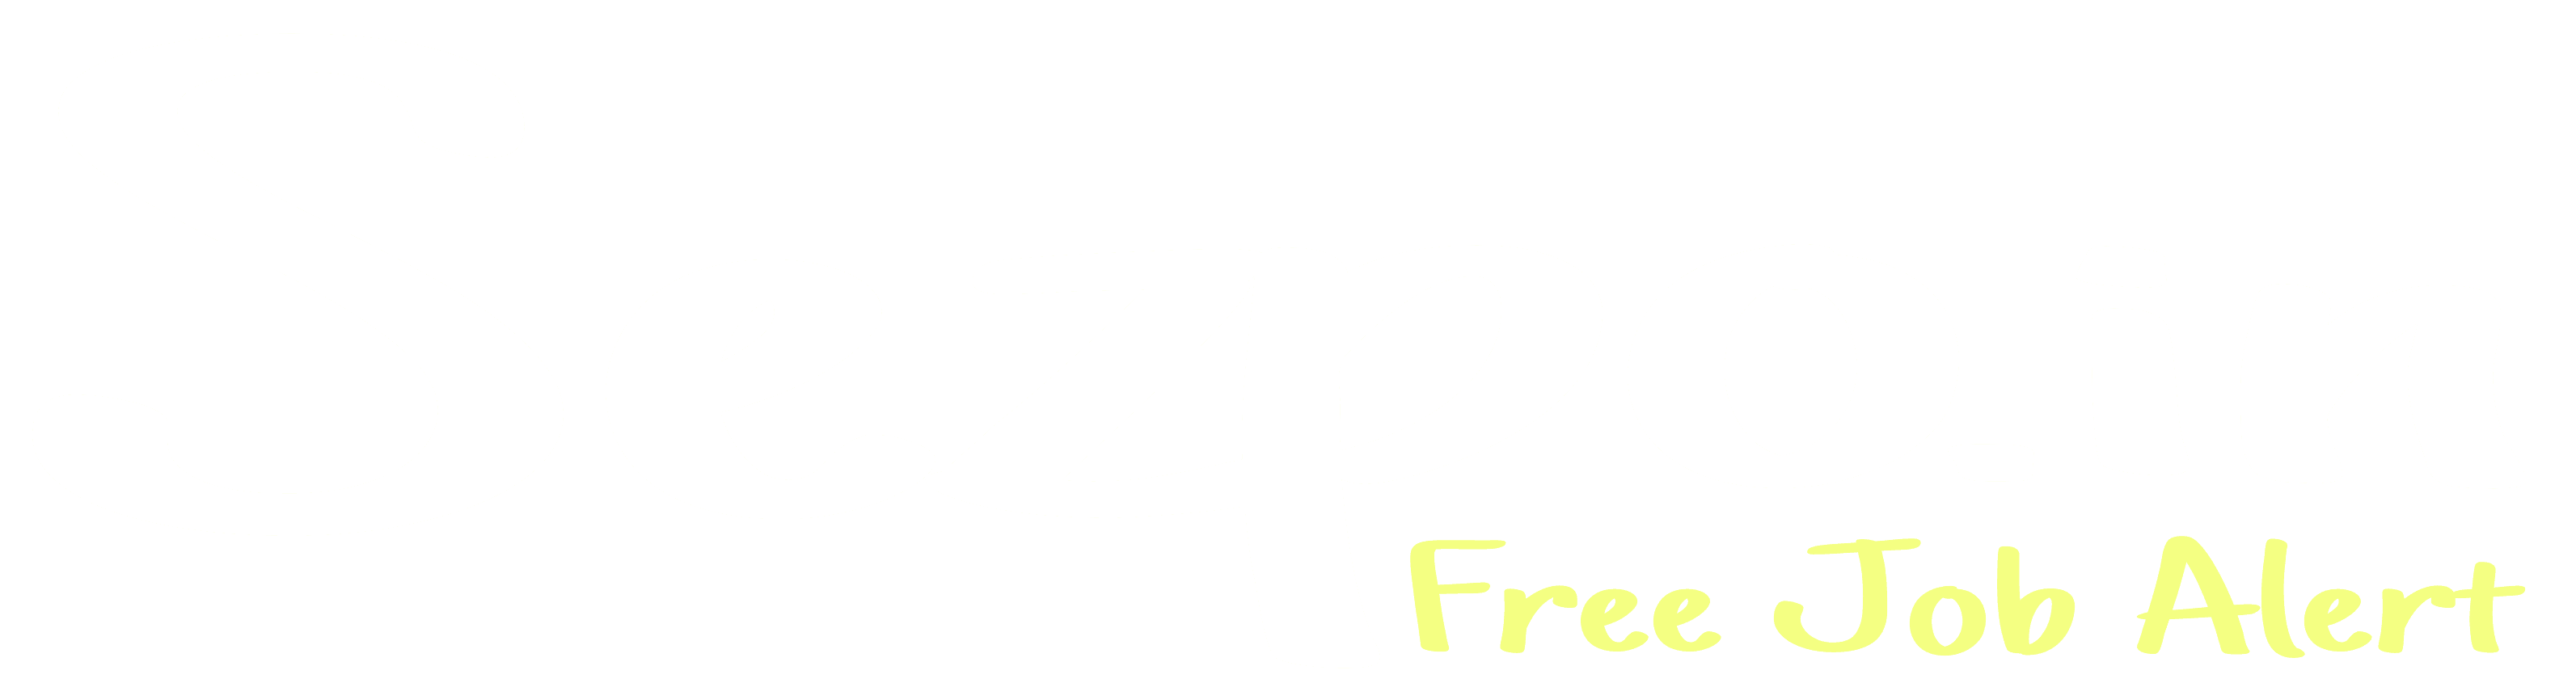 Sezpo Logo New